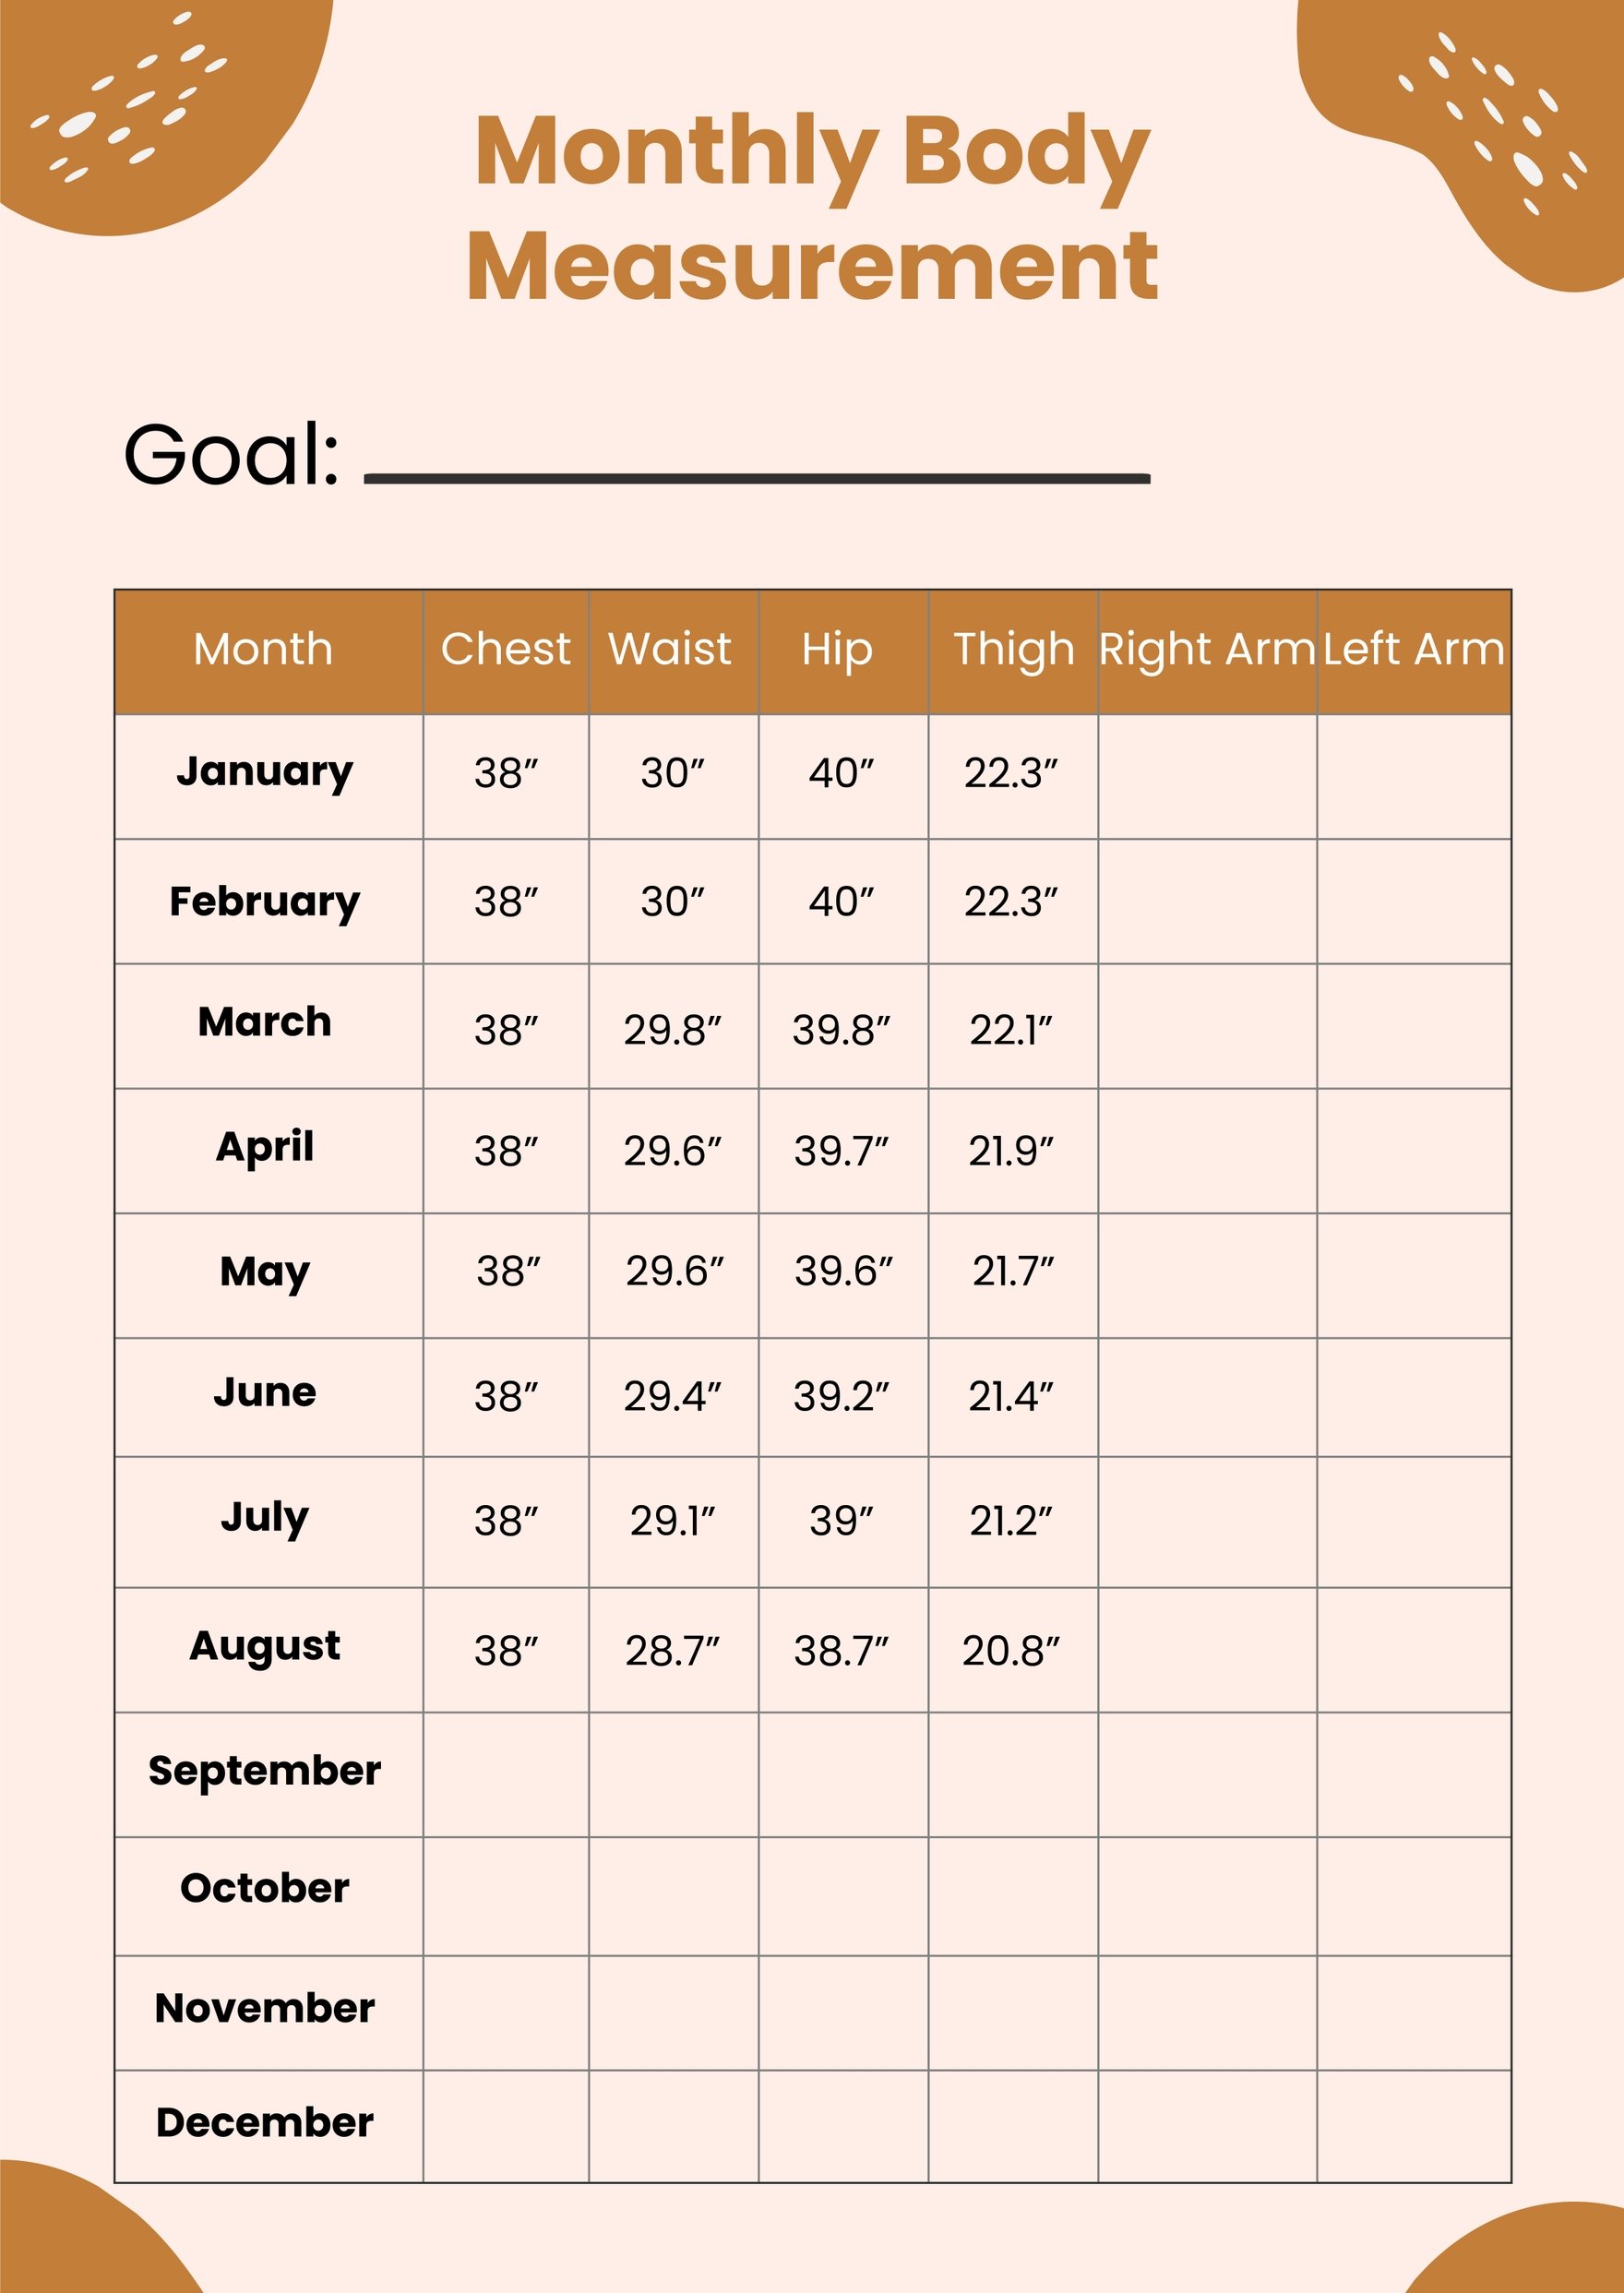 Monthly Body Measurement Chart in PDF, Illustrator